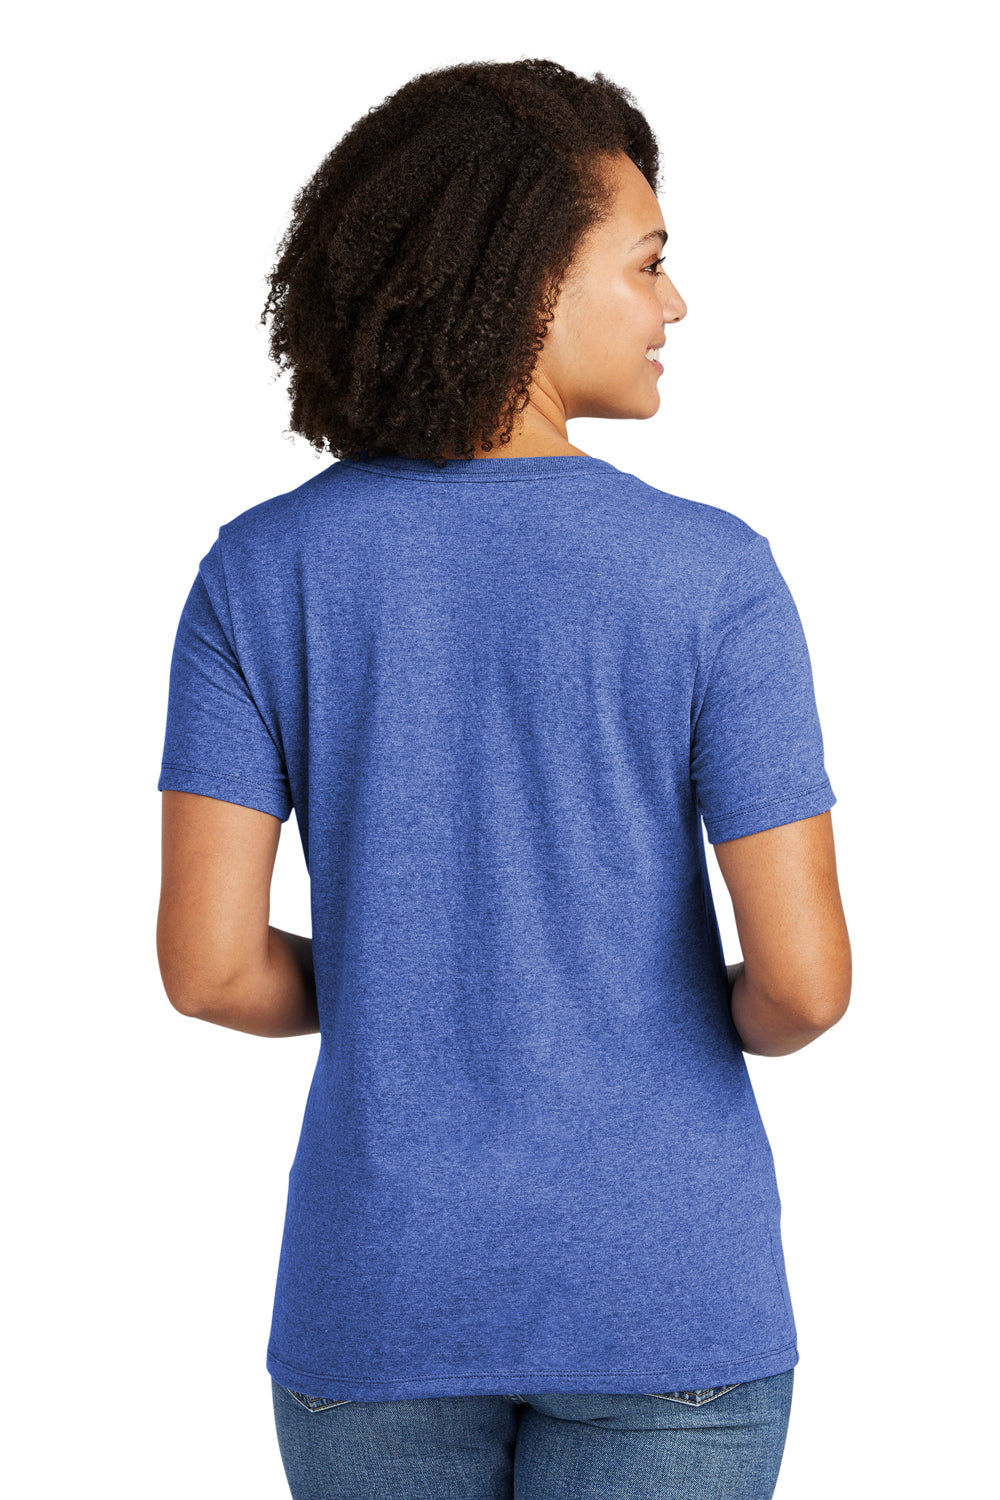 Allmade AL2303 Womens Recycled Short Sleeve V-Neck T-Shirt Heather Royal Blue Model Back